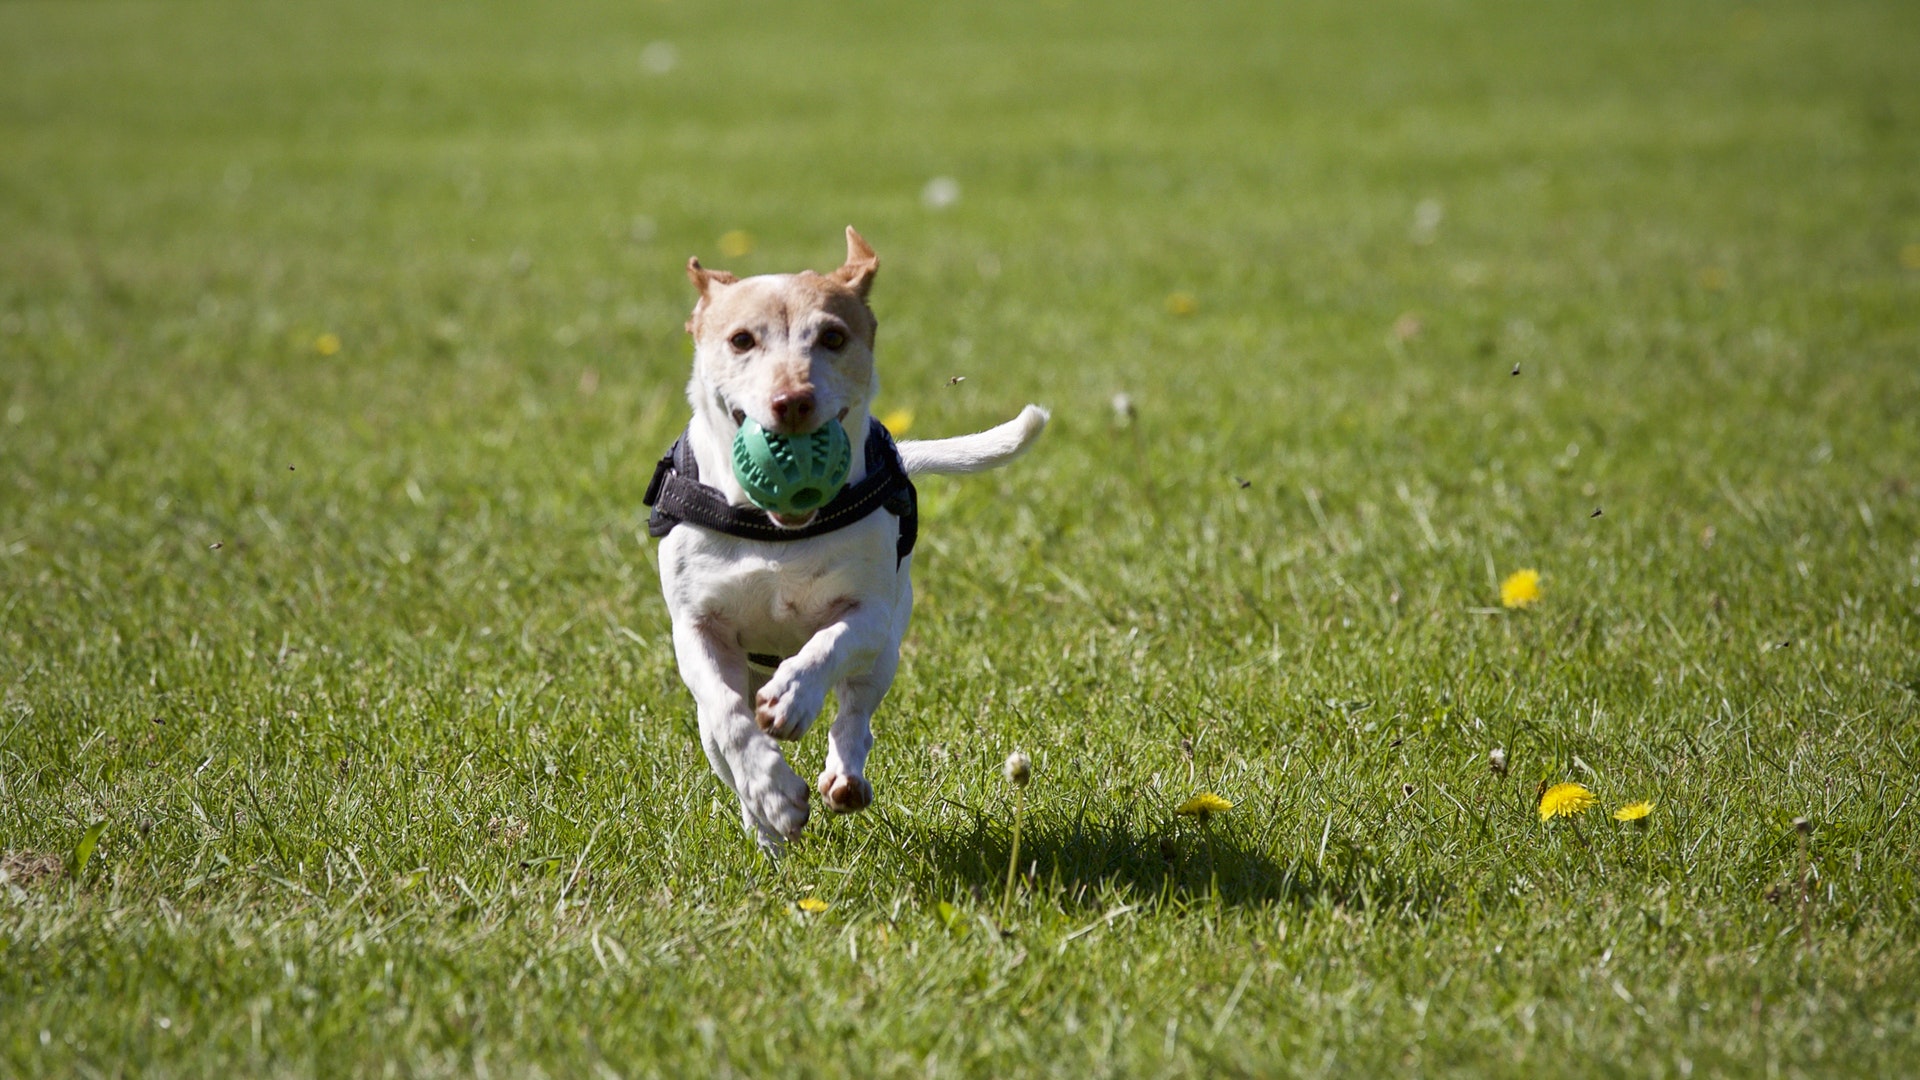 pup running on grass